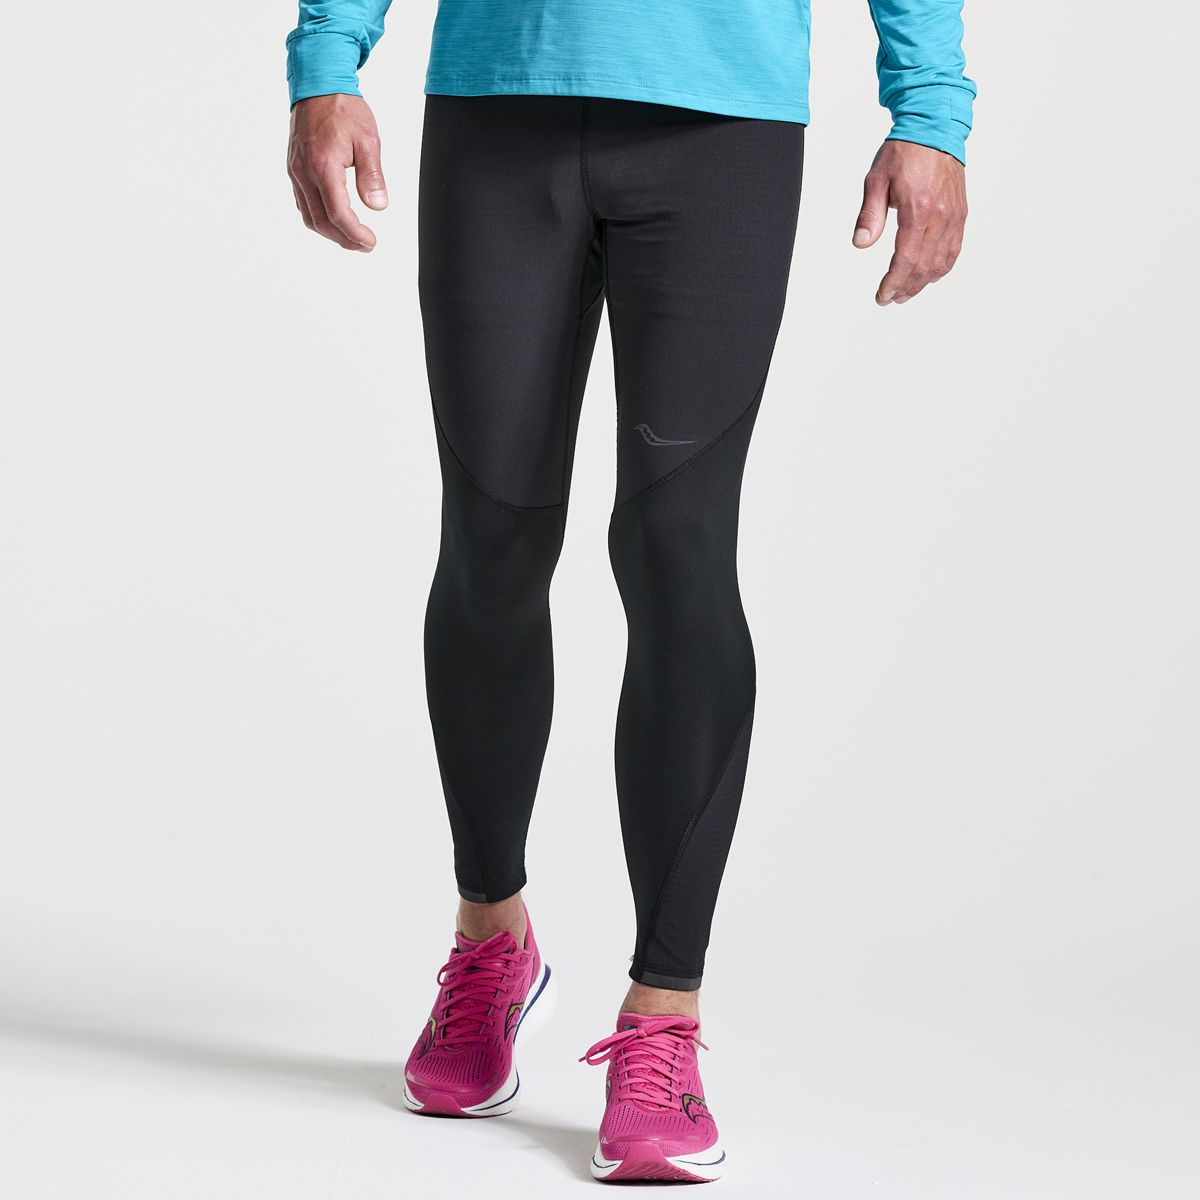 Winter Running Leggings. Running Tights & Trousers. Nike NL